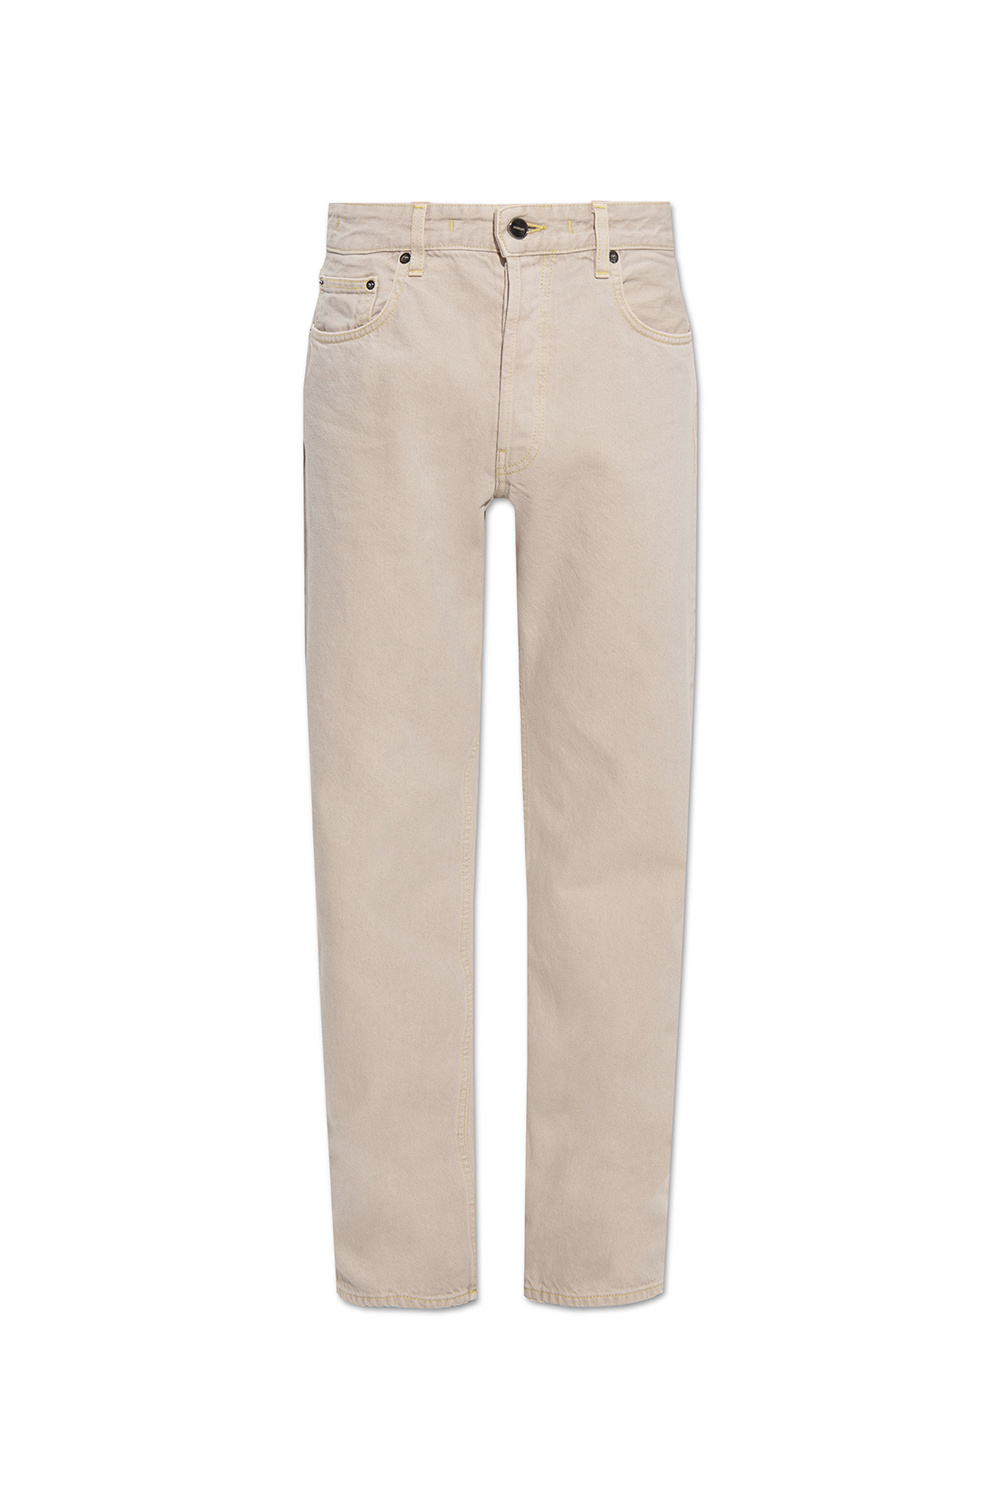 Jacquemus ‘Fresa’ jeans ajooni from organic cotton